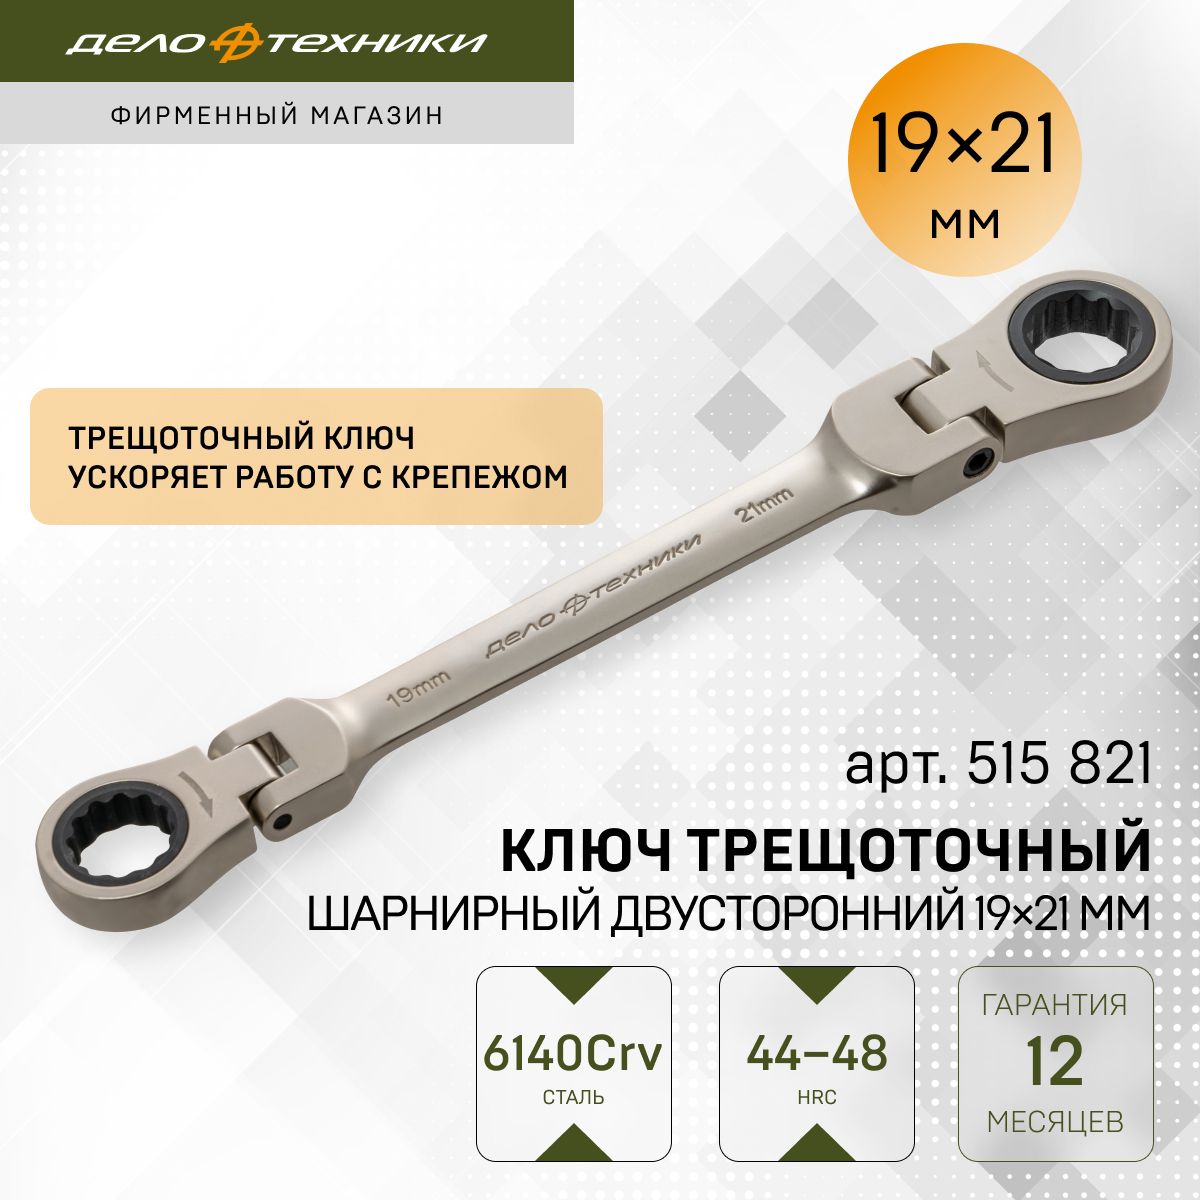 Ключтрещоточныйшарнирныйдвусторонний19x21мм,ДелоТехники,515821